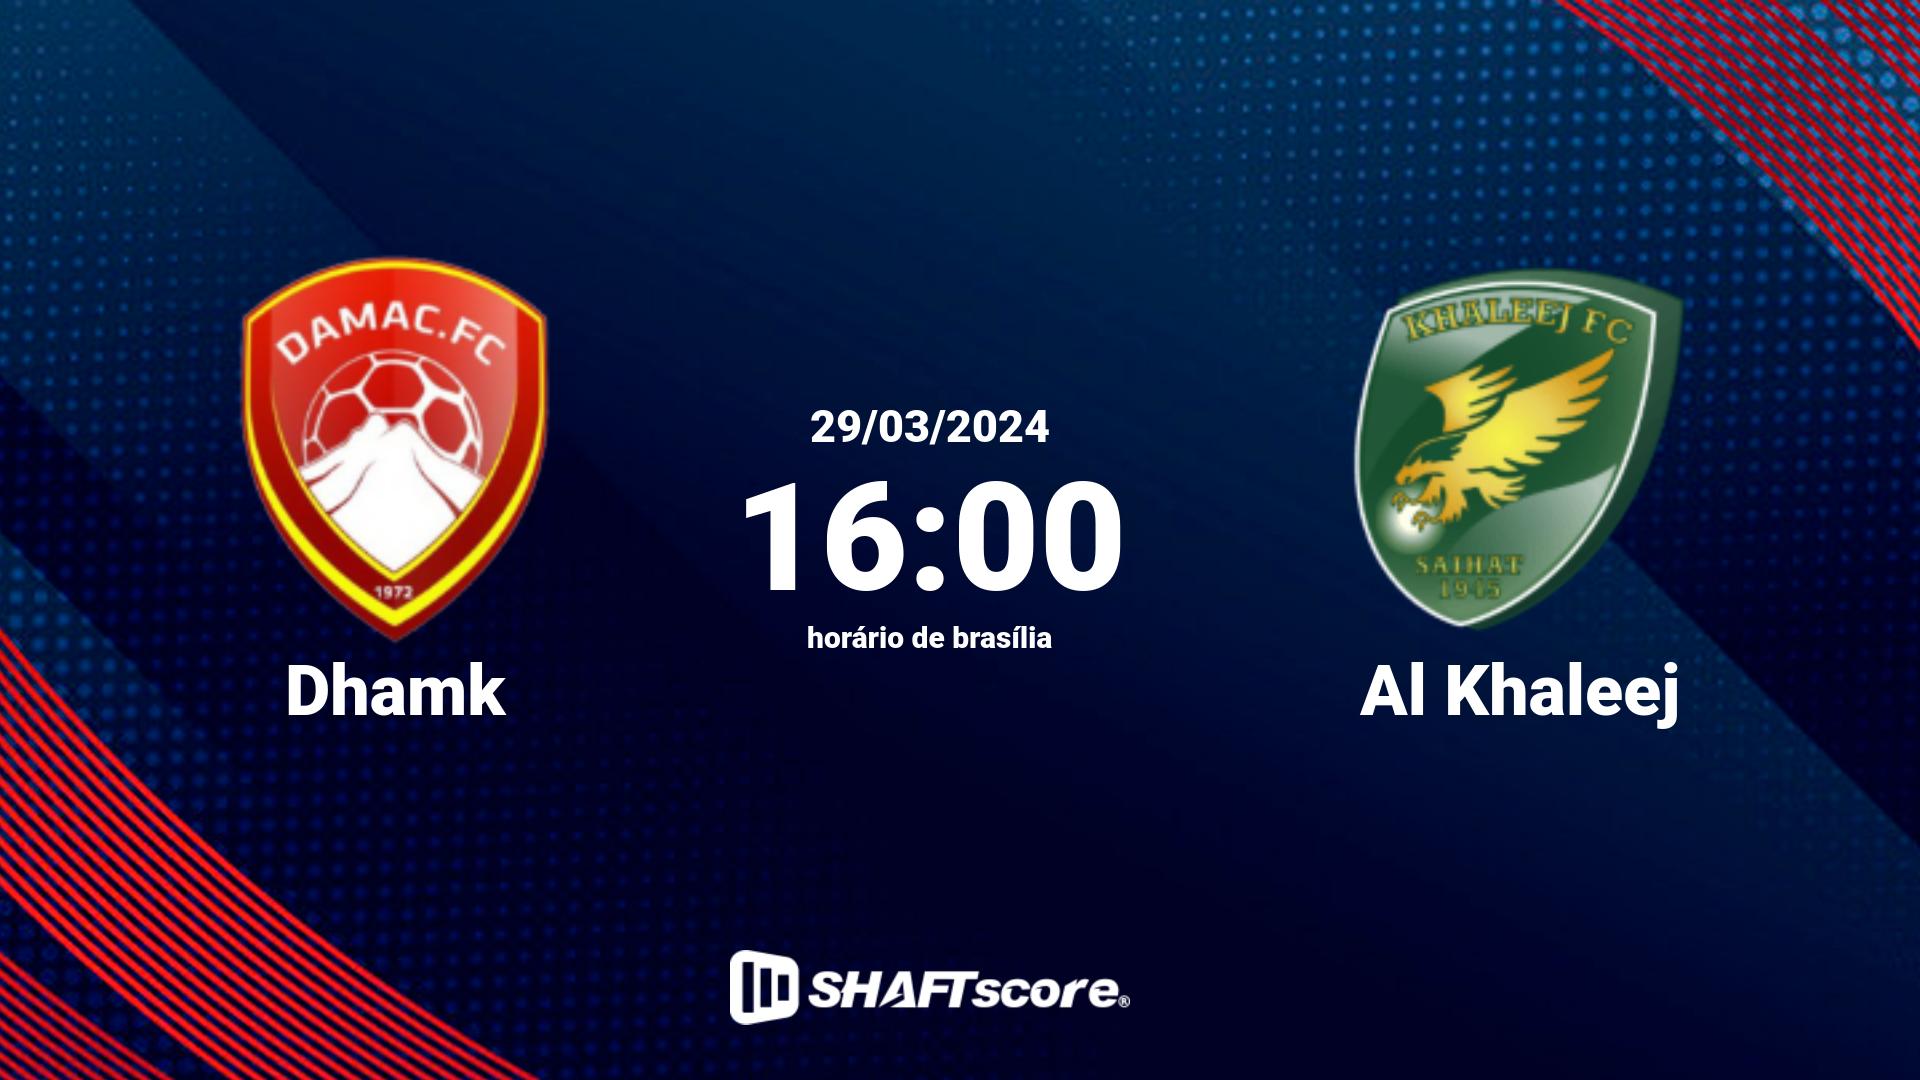 Estatísticas do jogo Dhamk vs Al Khaleej 29.03 16:00